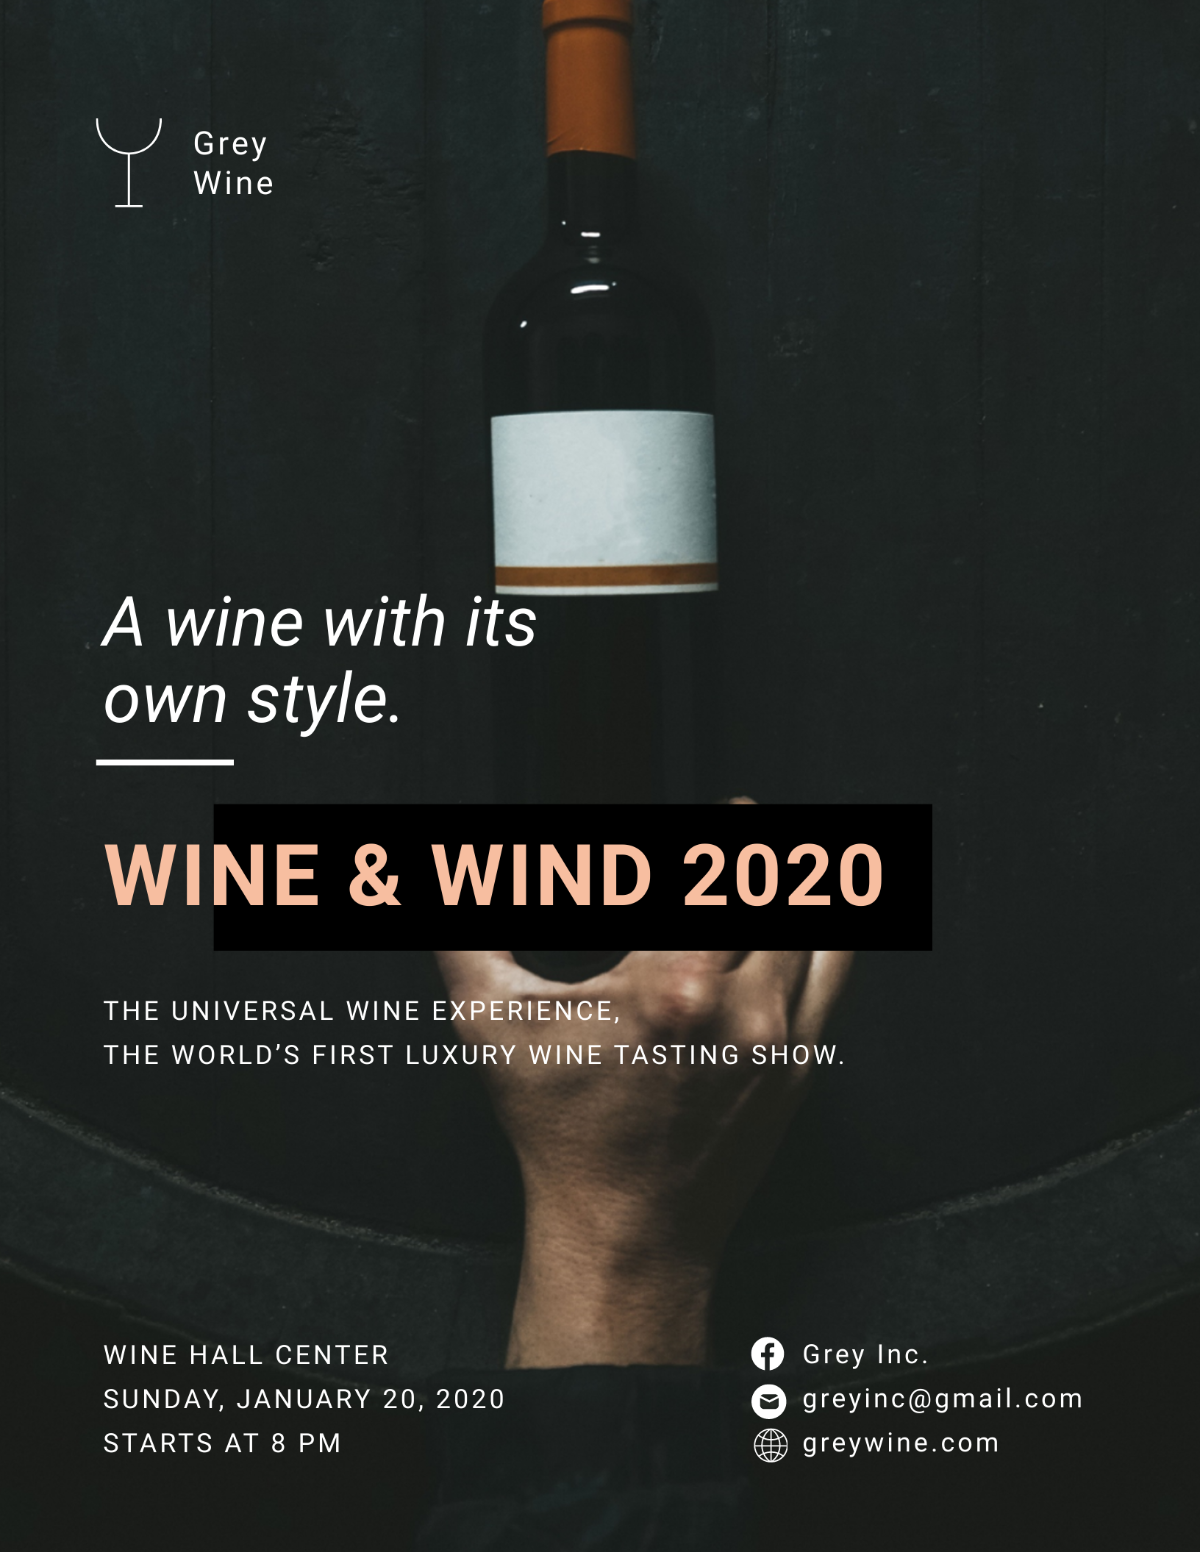 Wine Flyer Template